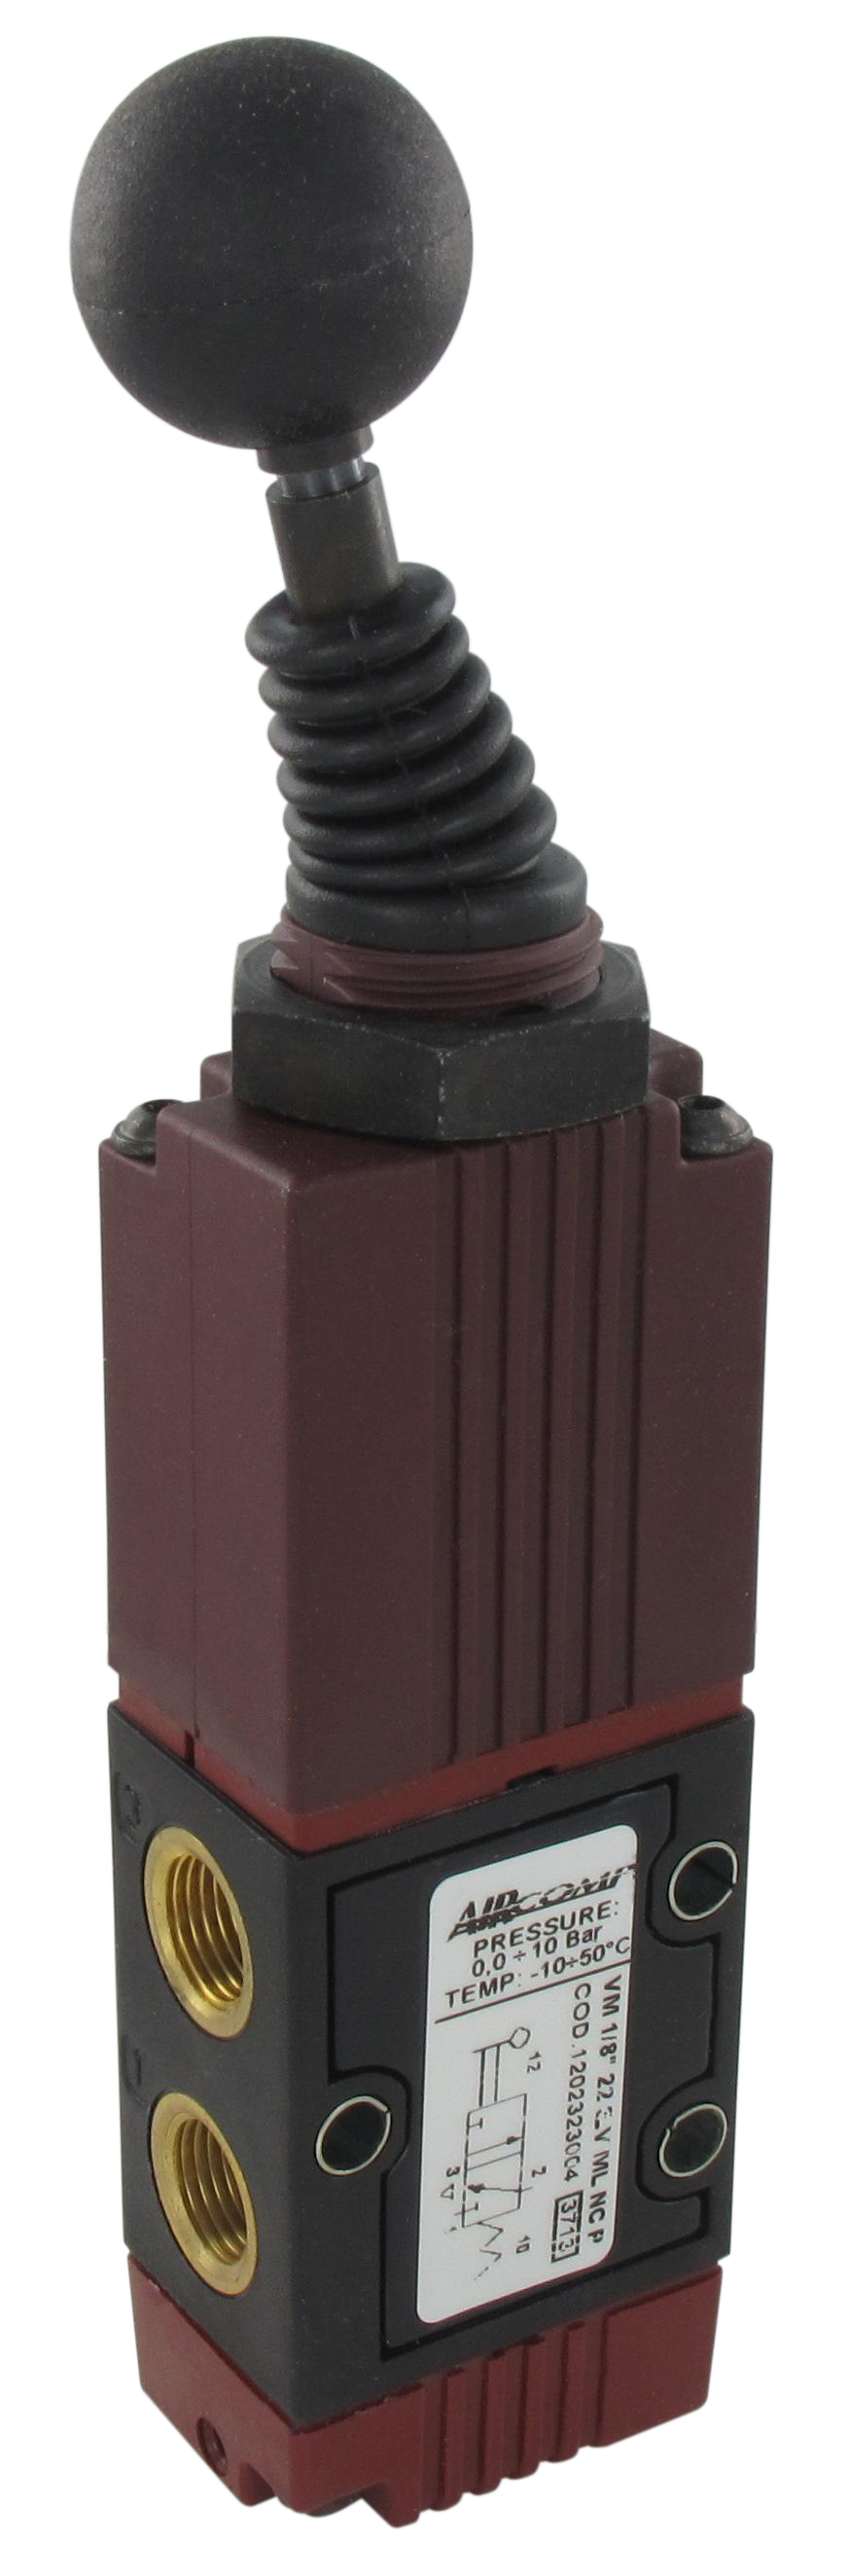 Pneumatic lever valves series 120 (G1/8 - 490 Nl/min) SENGA-AIRCOMP